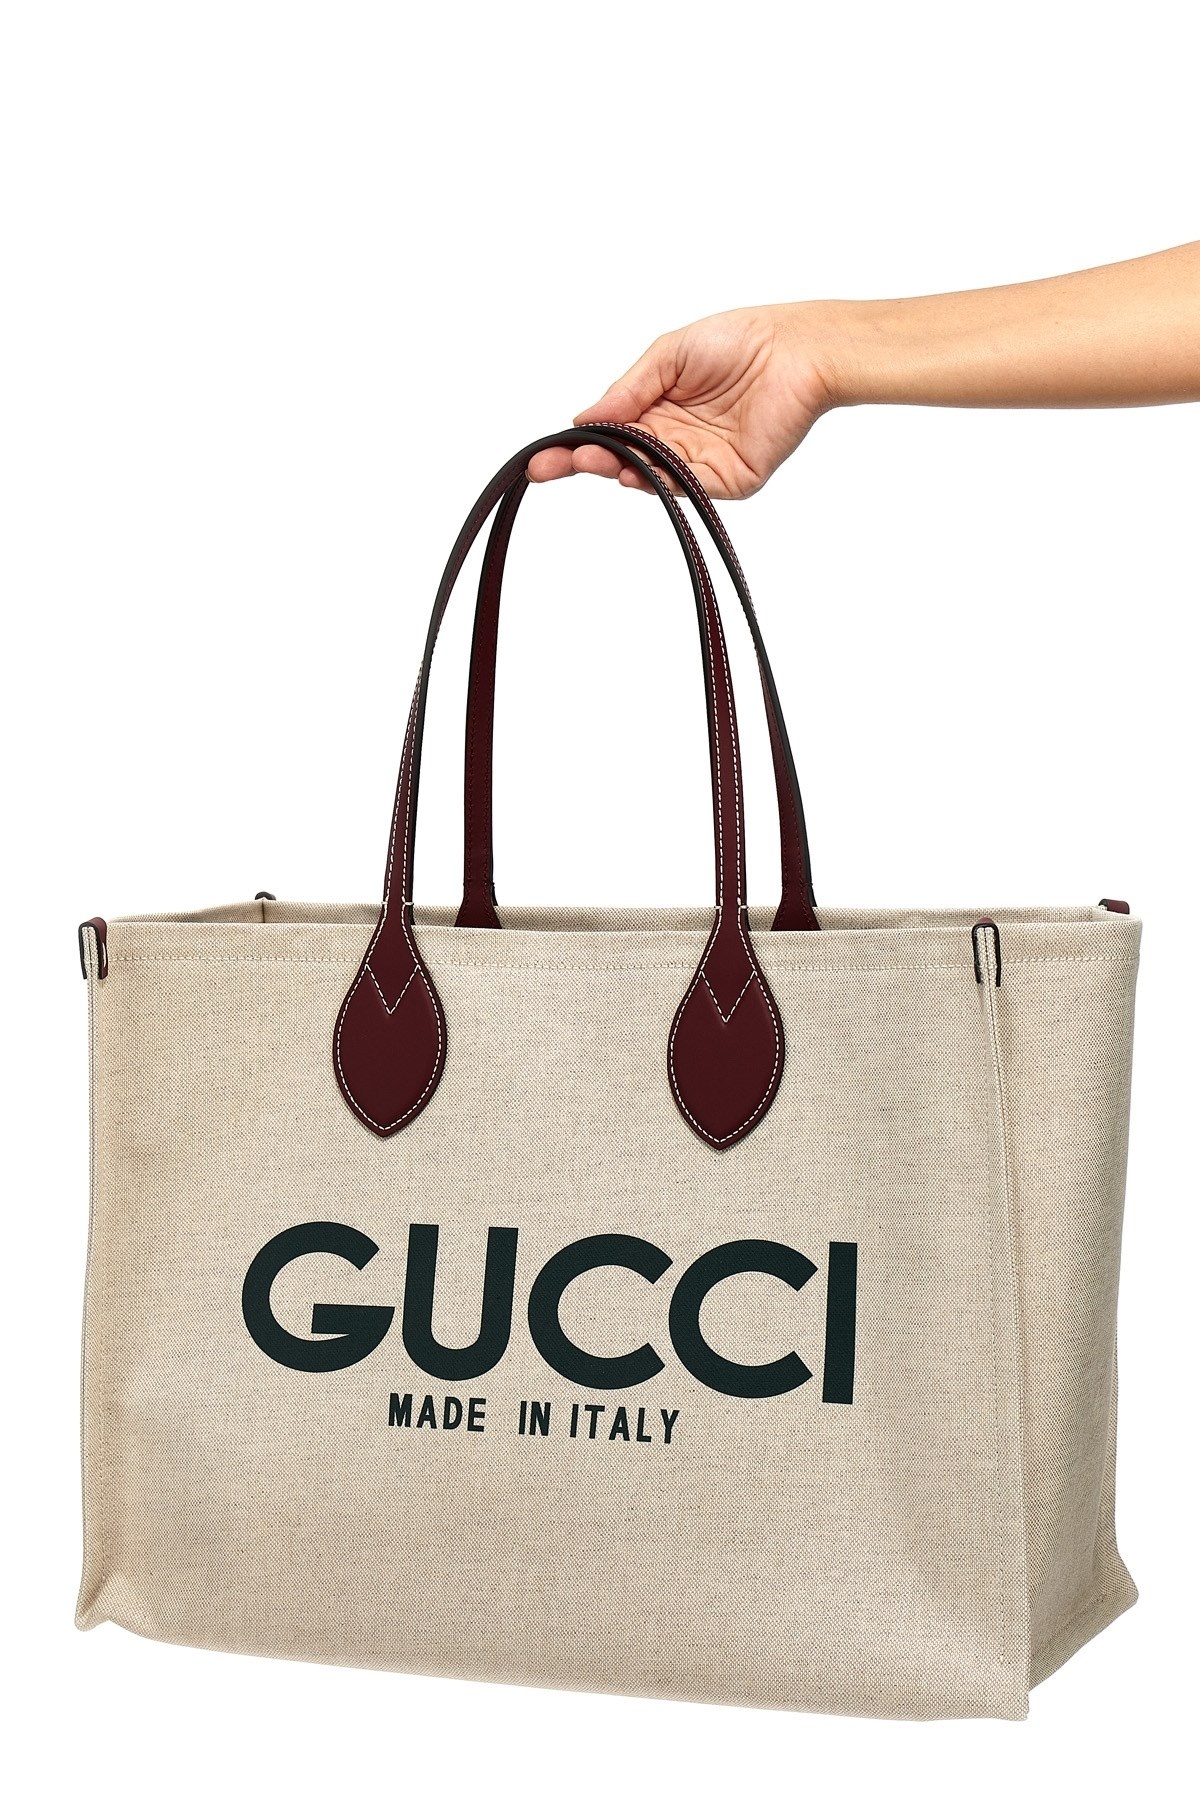 'Gucci' shopping bag - 2